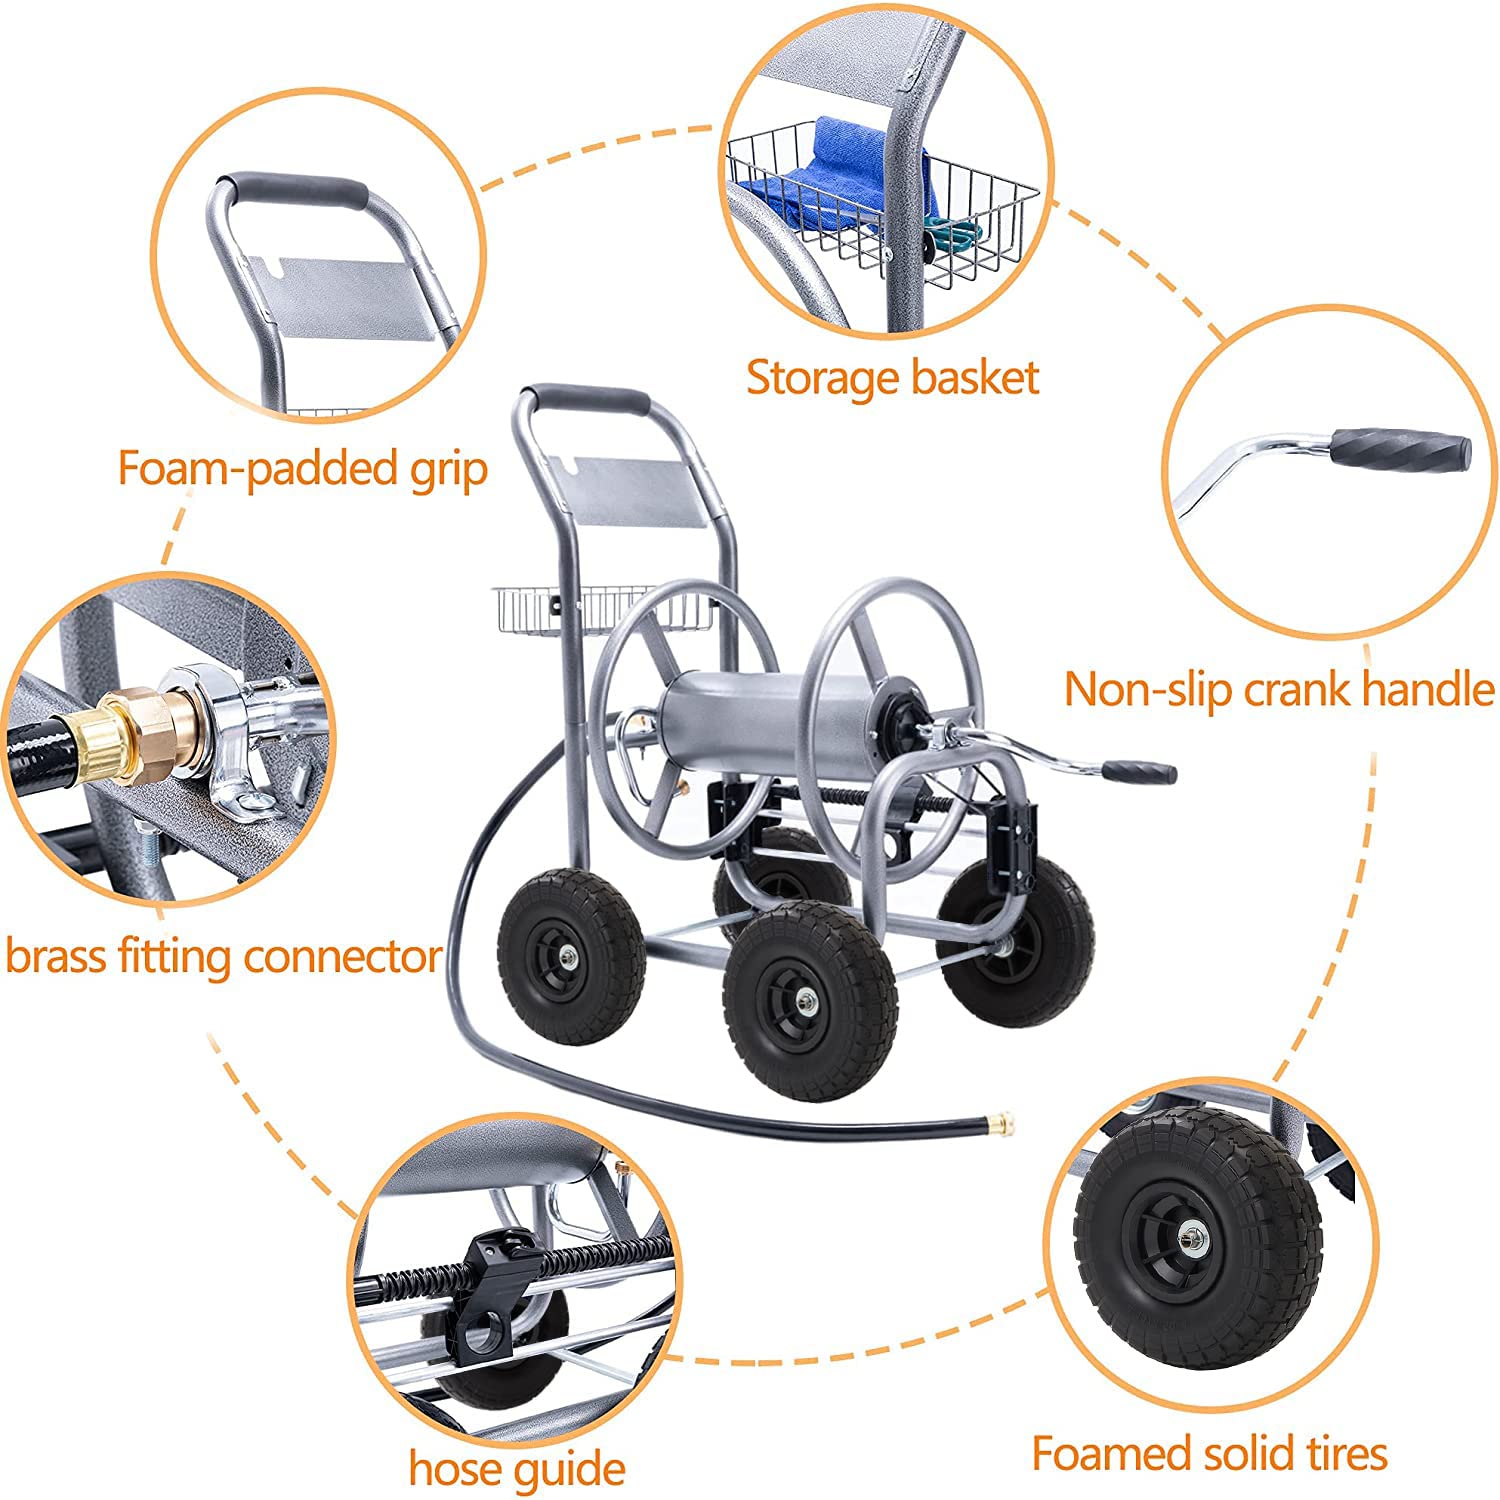 KAMMQI Hose Reel Cart - Portable Garden Hose Reel Cart Outdoor Water Hose  Reel with Wheels, Holds 98 Feet of 3/4 inch, and 131Feet of 5/8 inch Hose  with Hose Adapter for